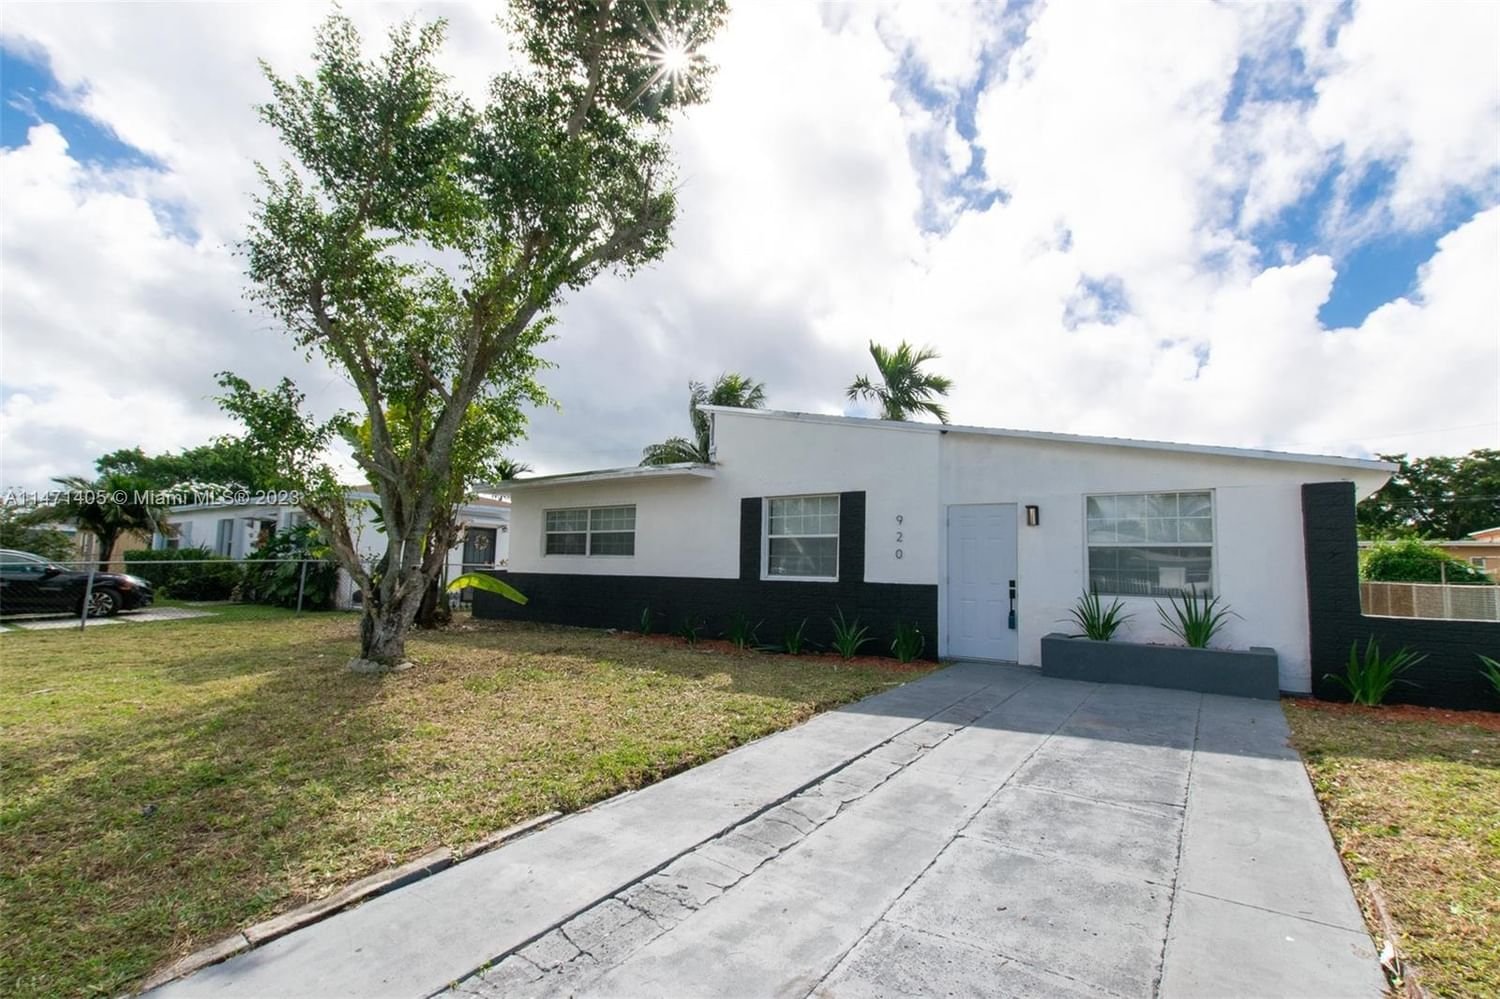 Real estate property located at 920 84th St, Miami-Dade County, ARCOLA GARDENS, Miami, FL